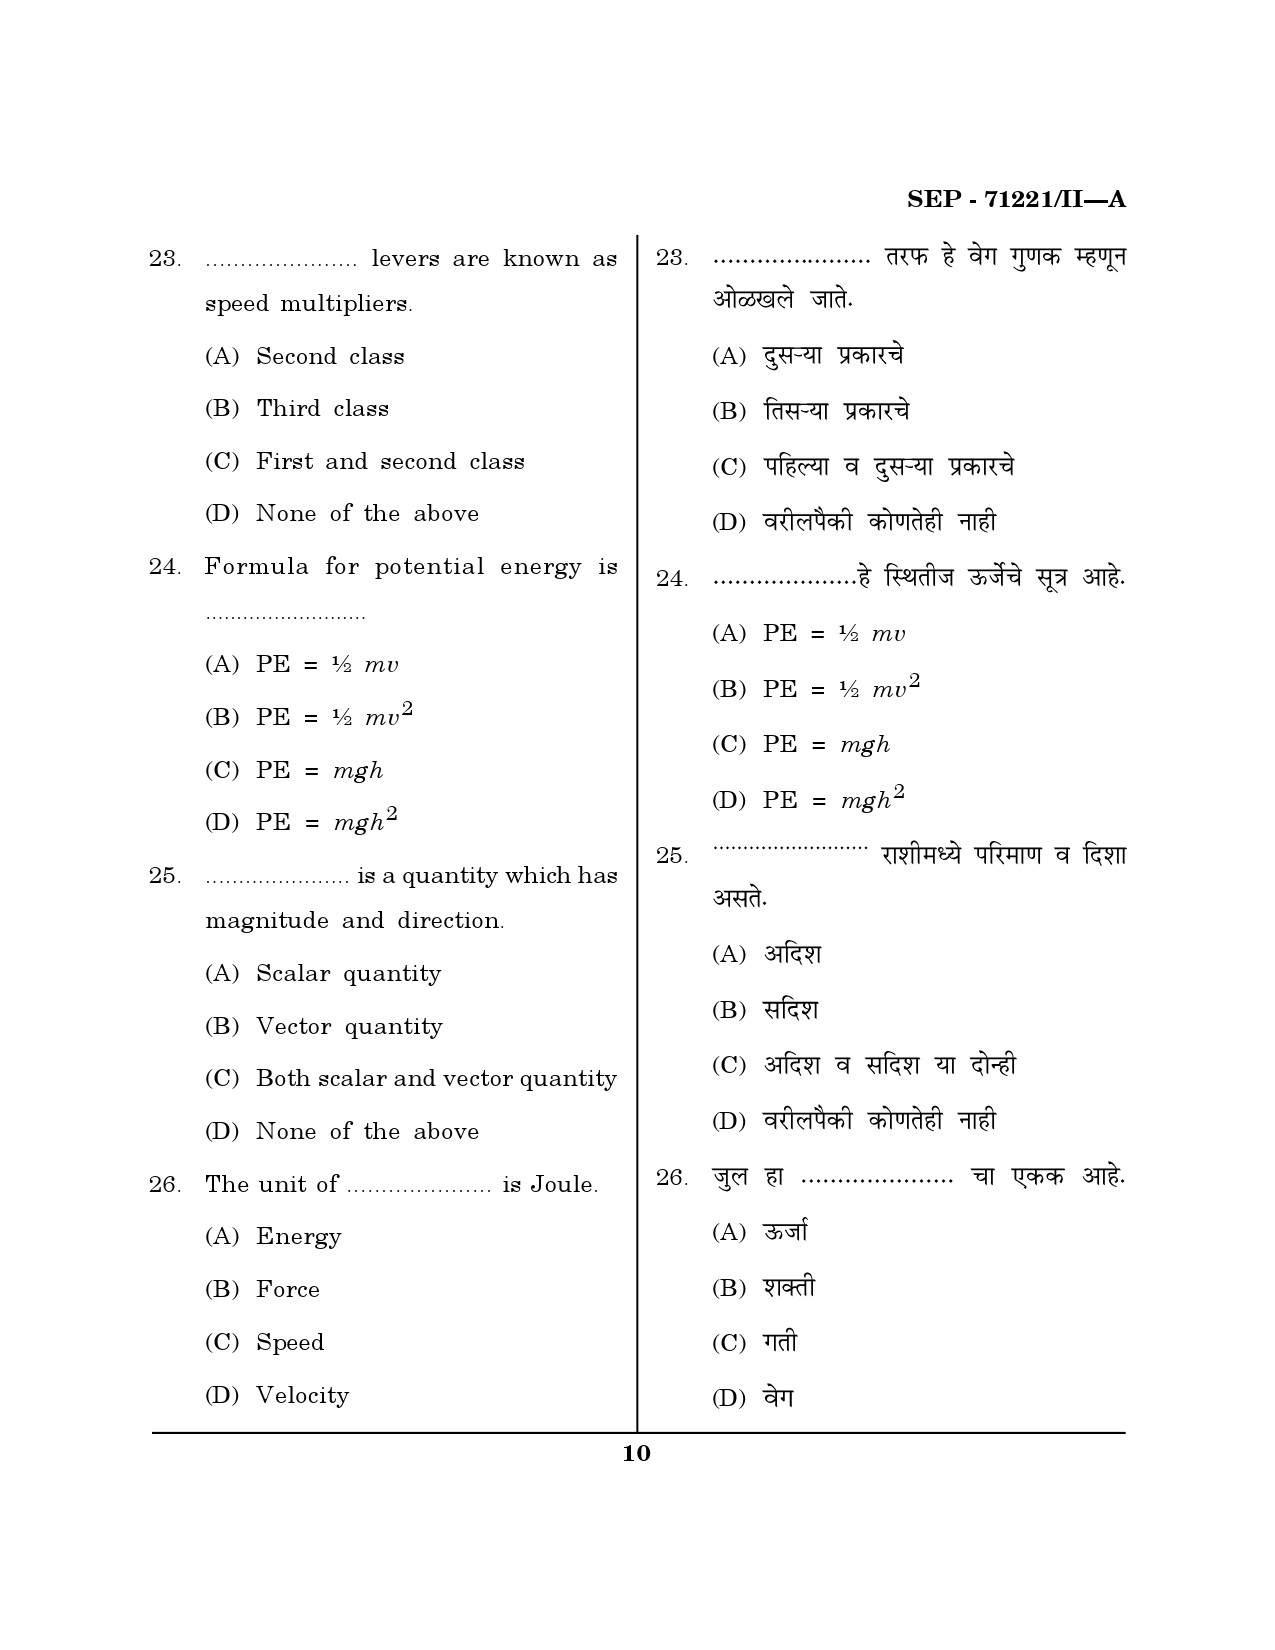 Maharashtra SET Physical Education Exam Question Paper September 2021 9